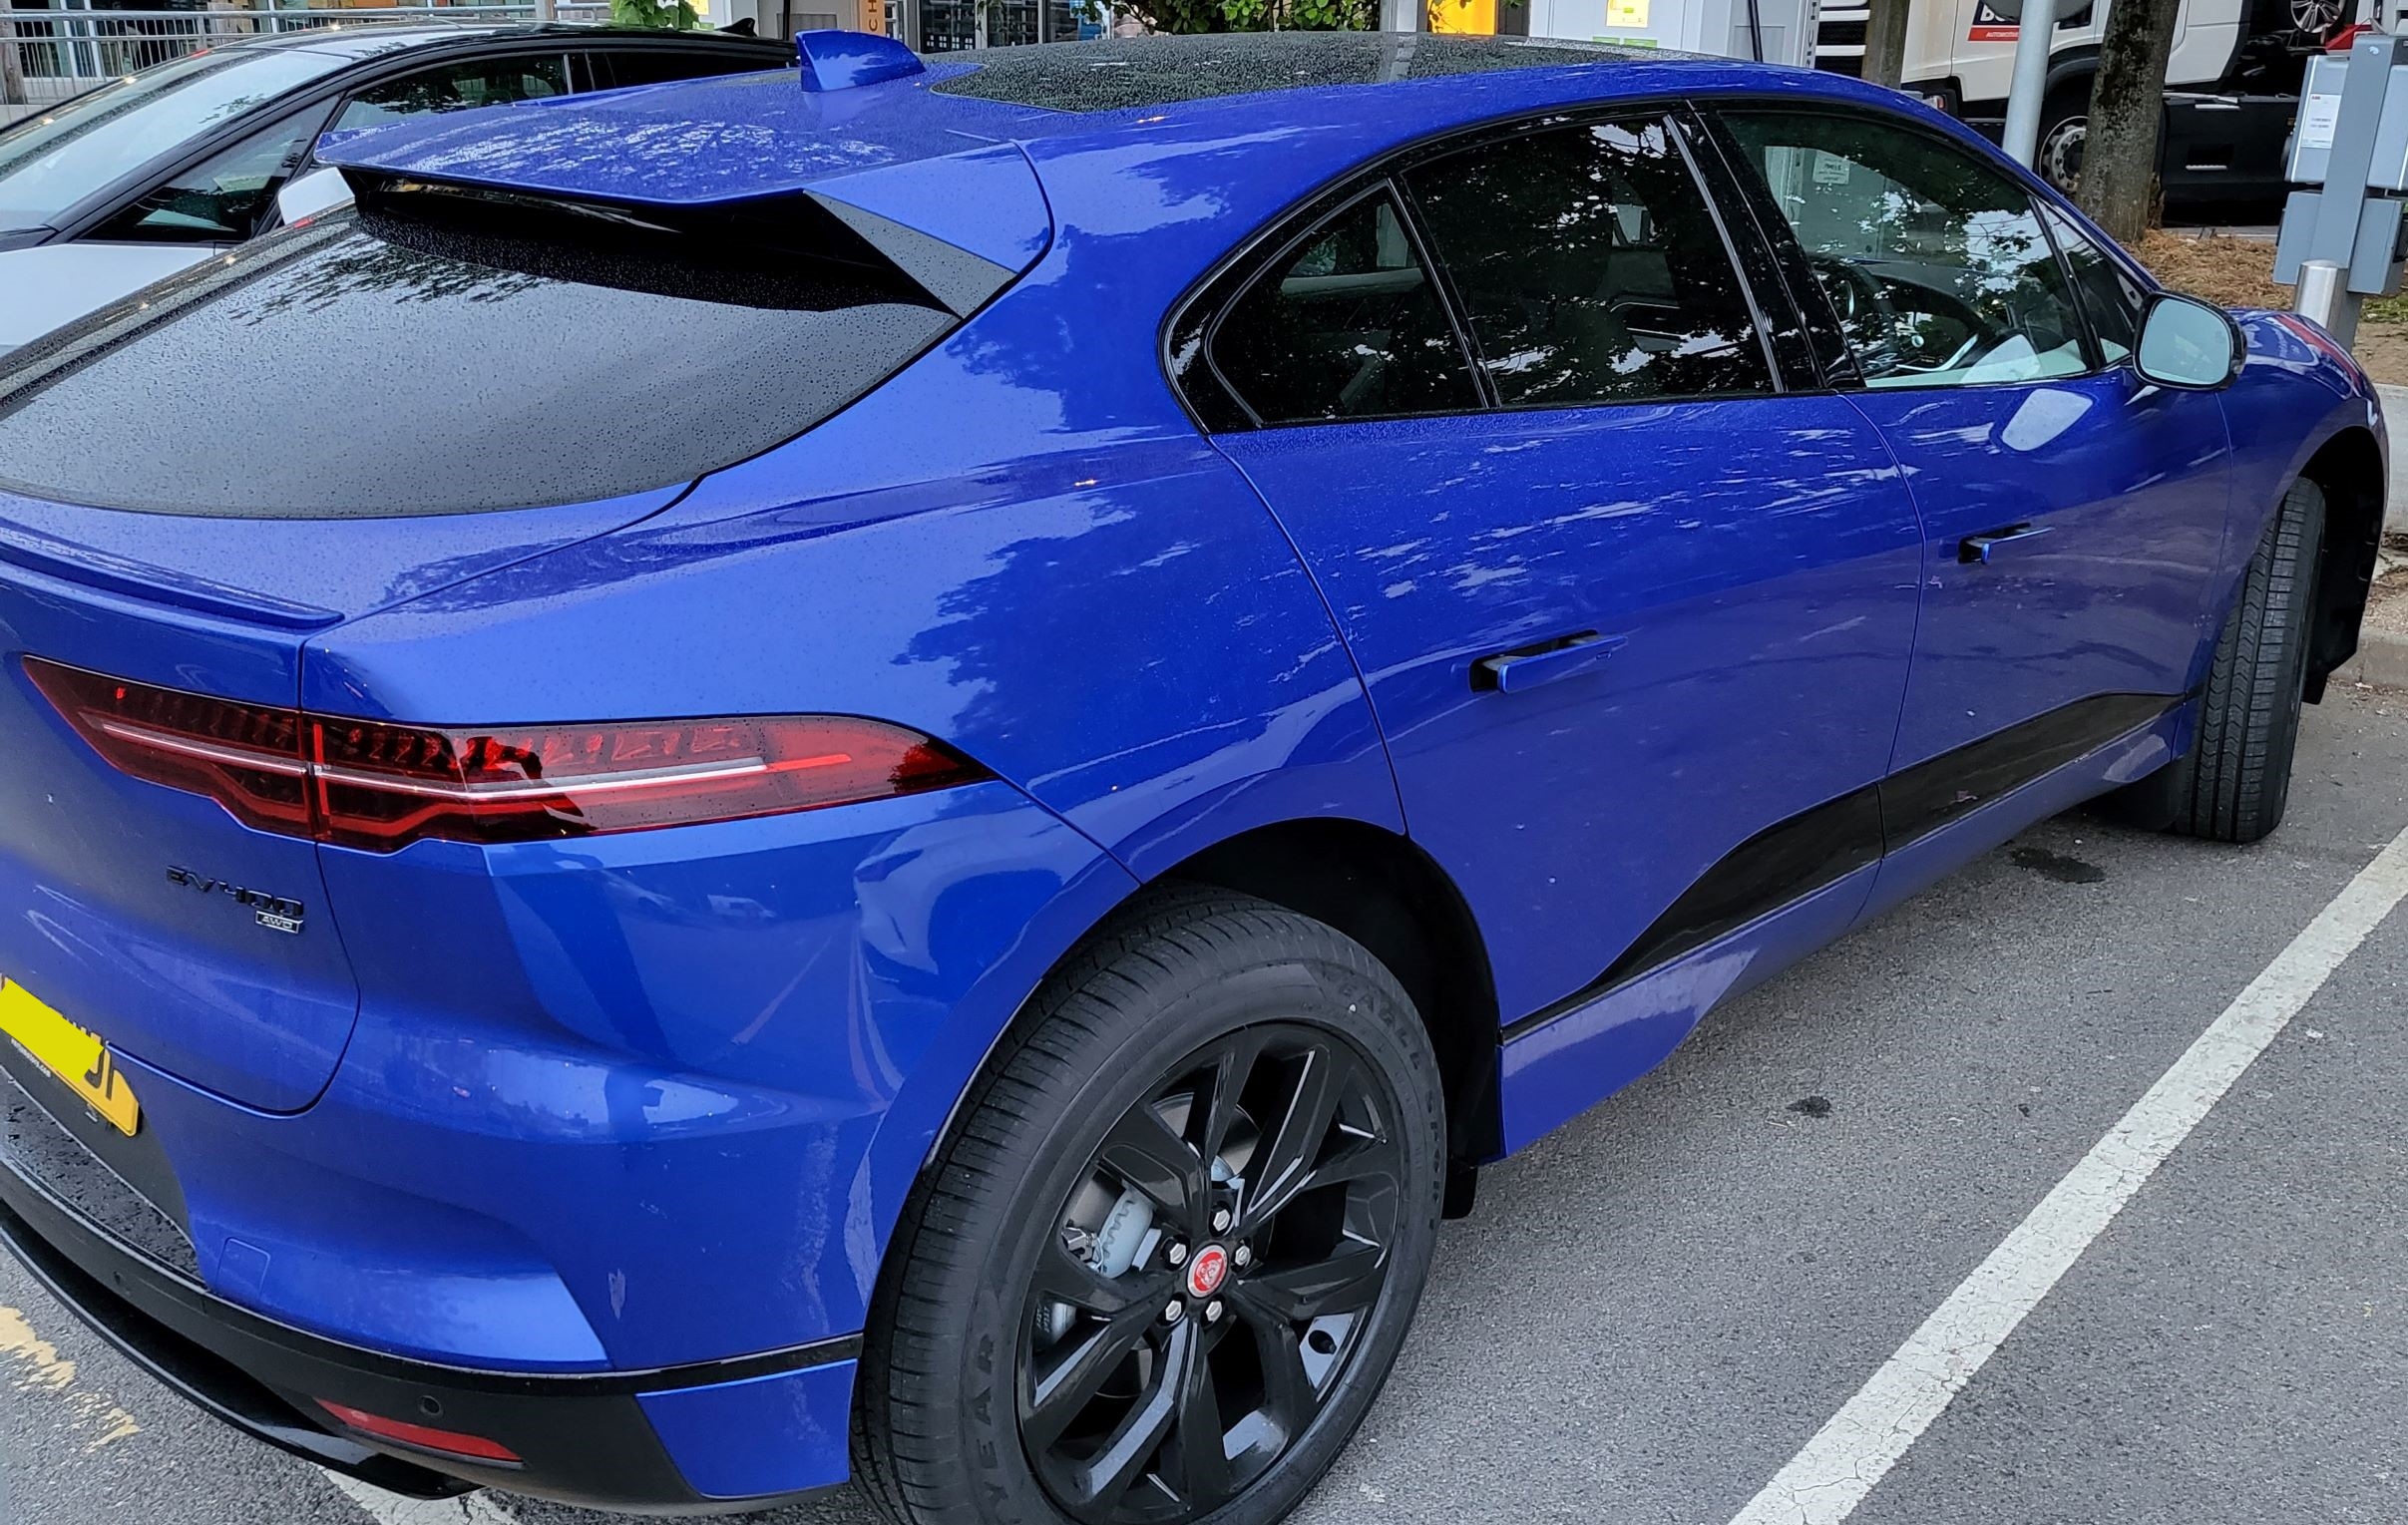 Jaguar I-PACE 2022 electric car owner review